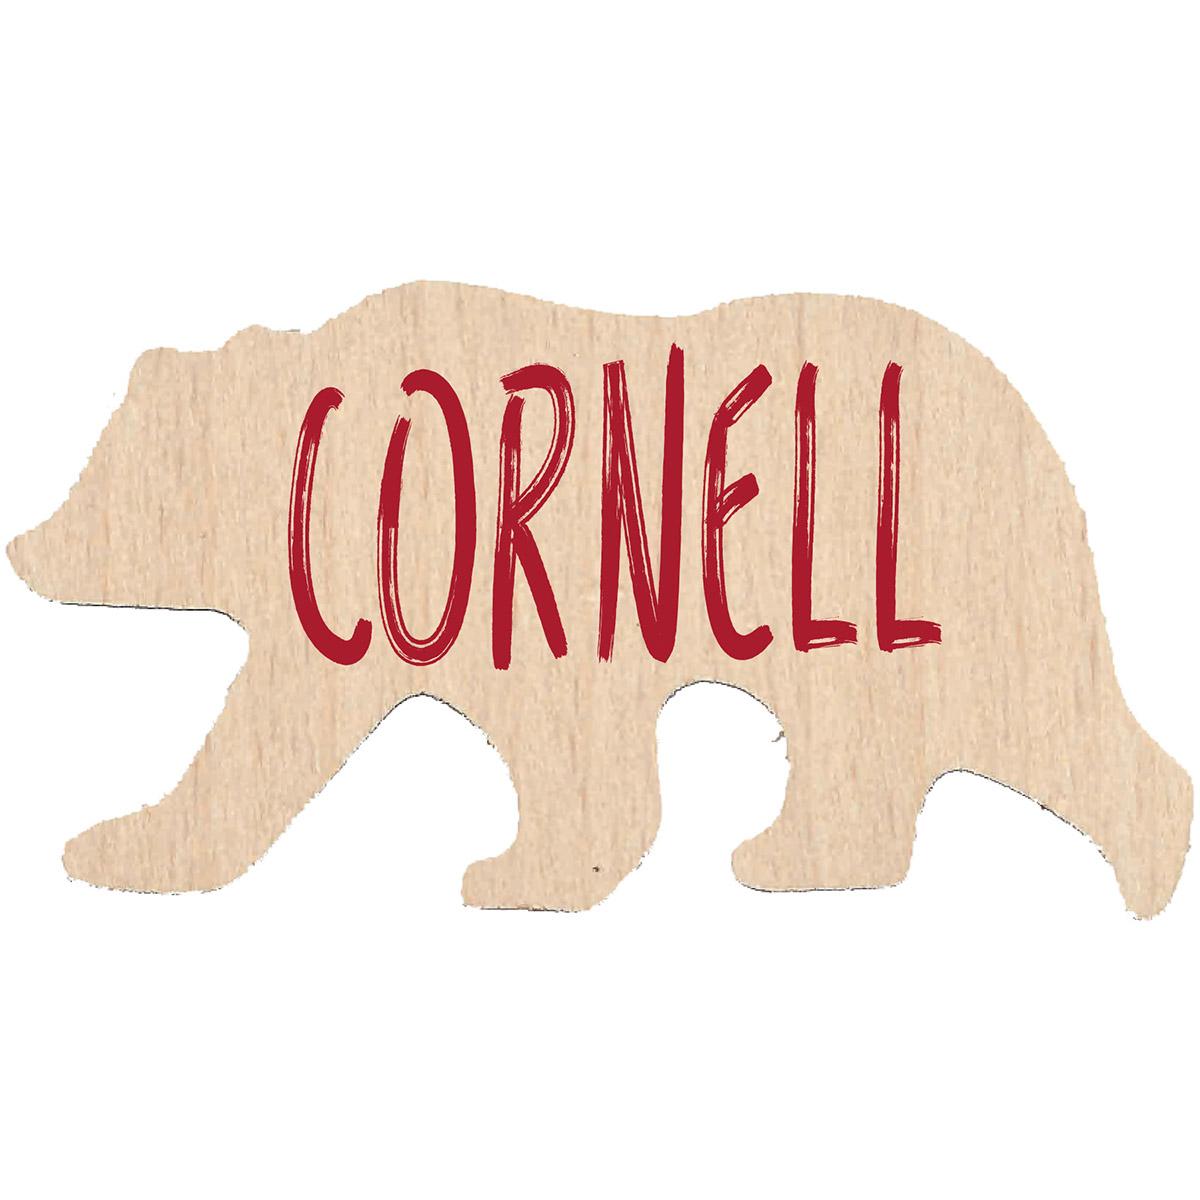 Walking Cornell Wooden Bear Magnet